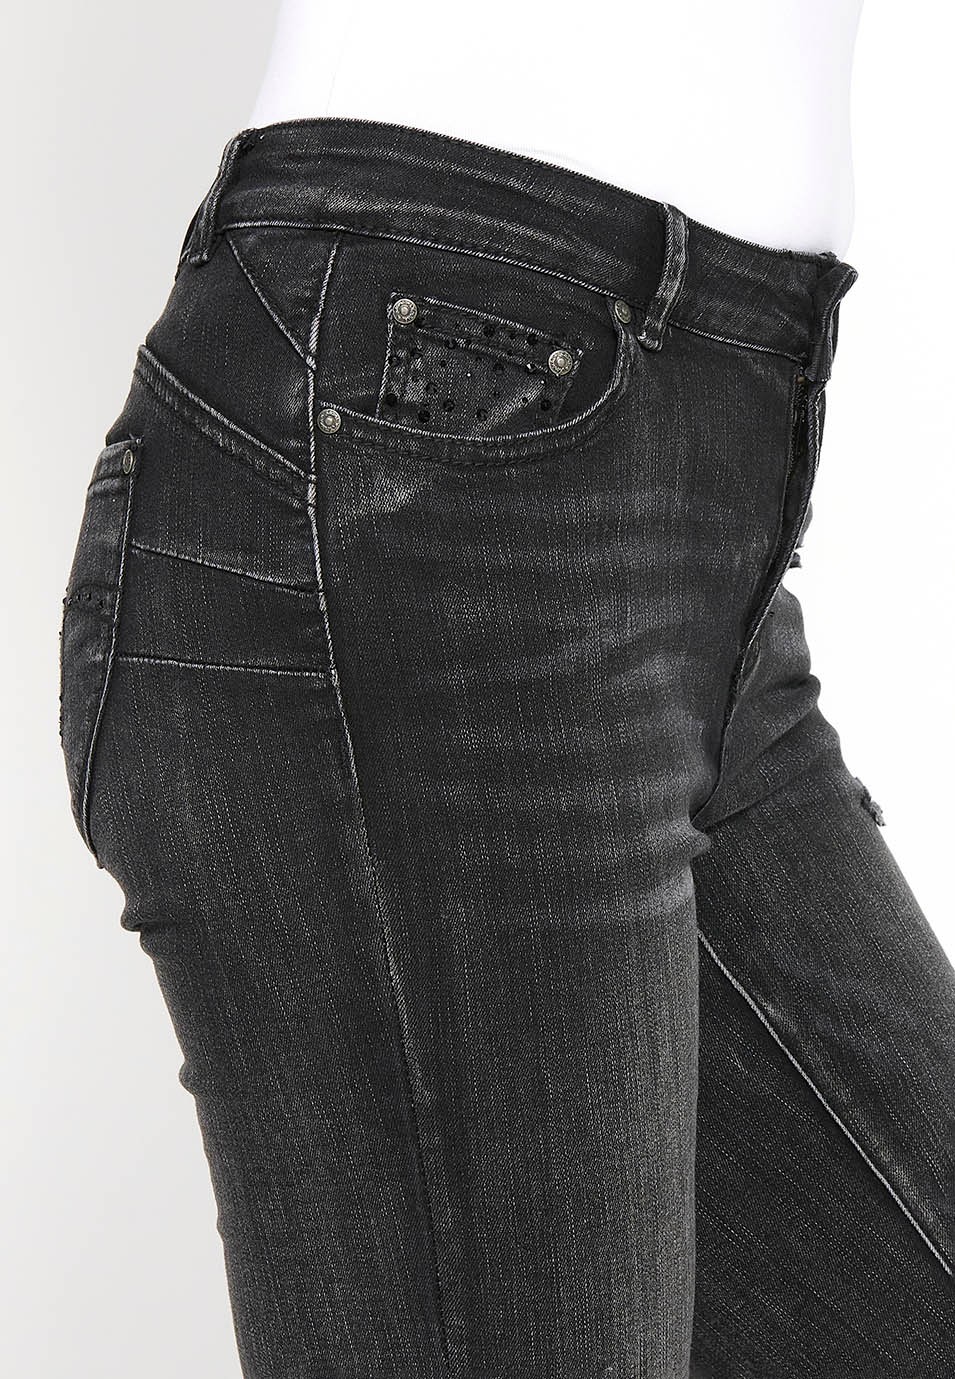 Long bell bottom pants with broken details in black for women